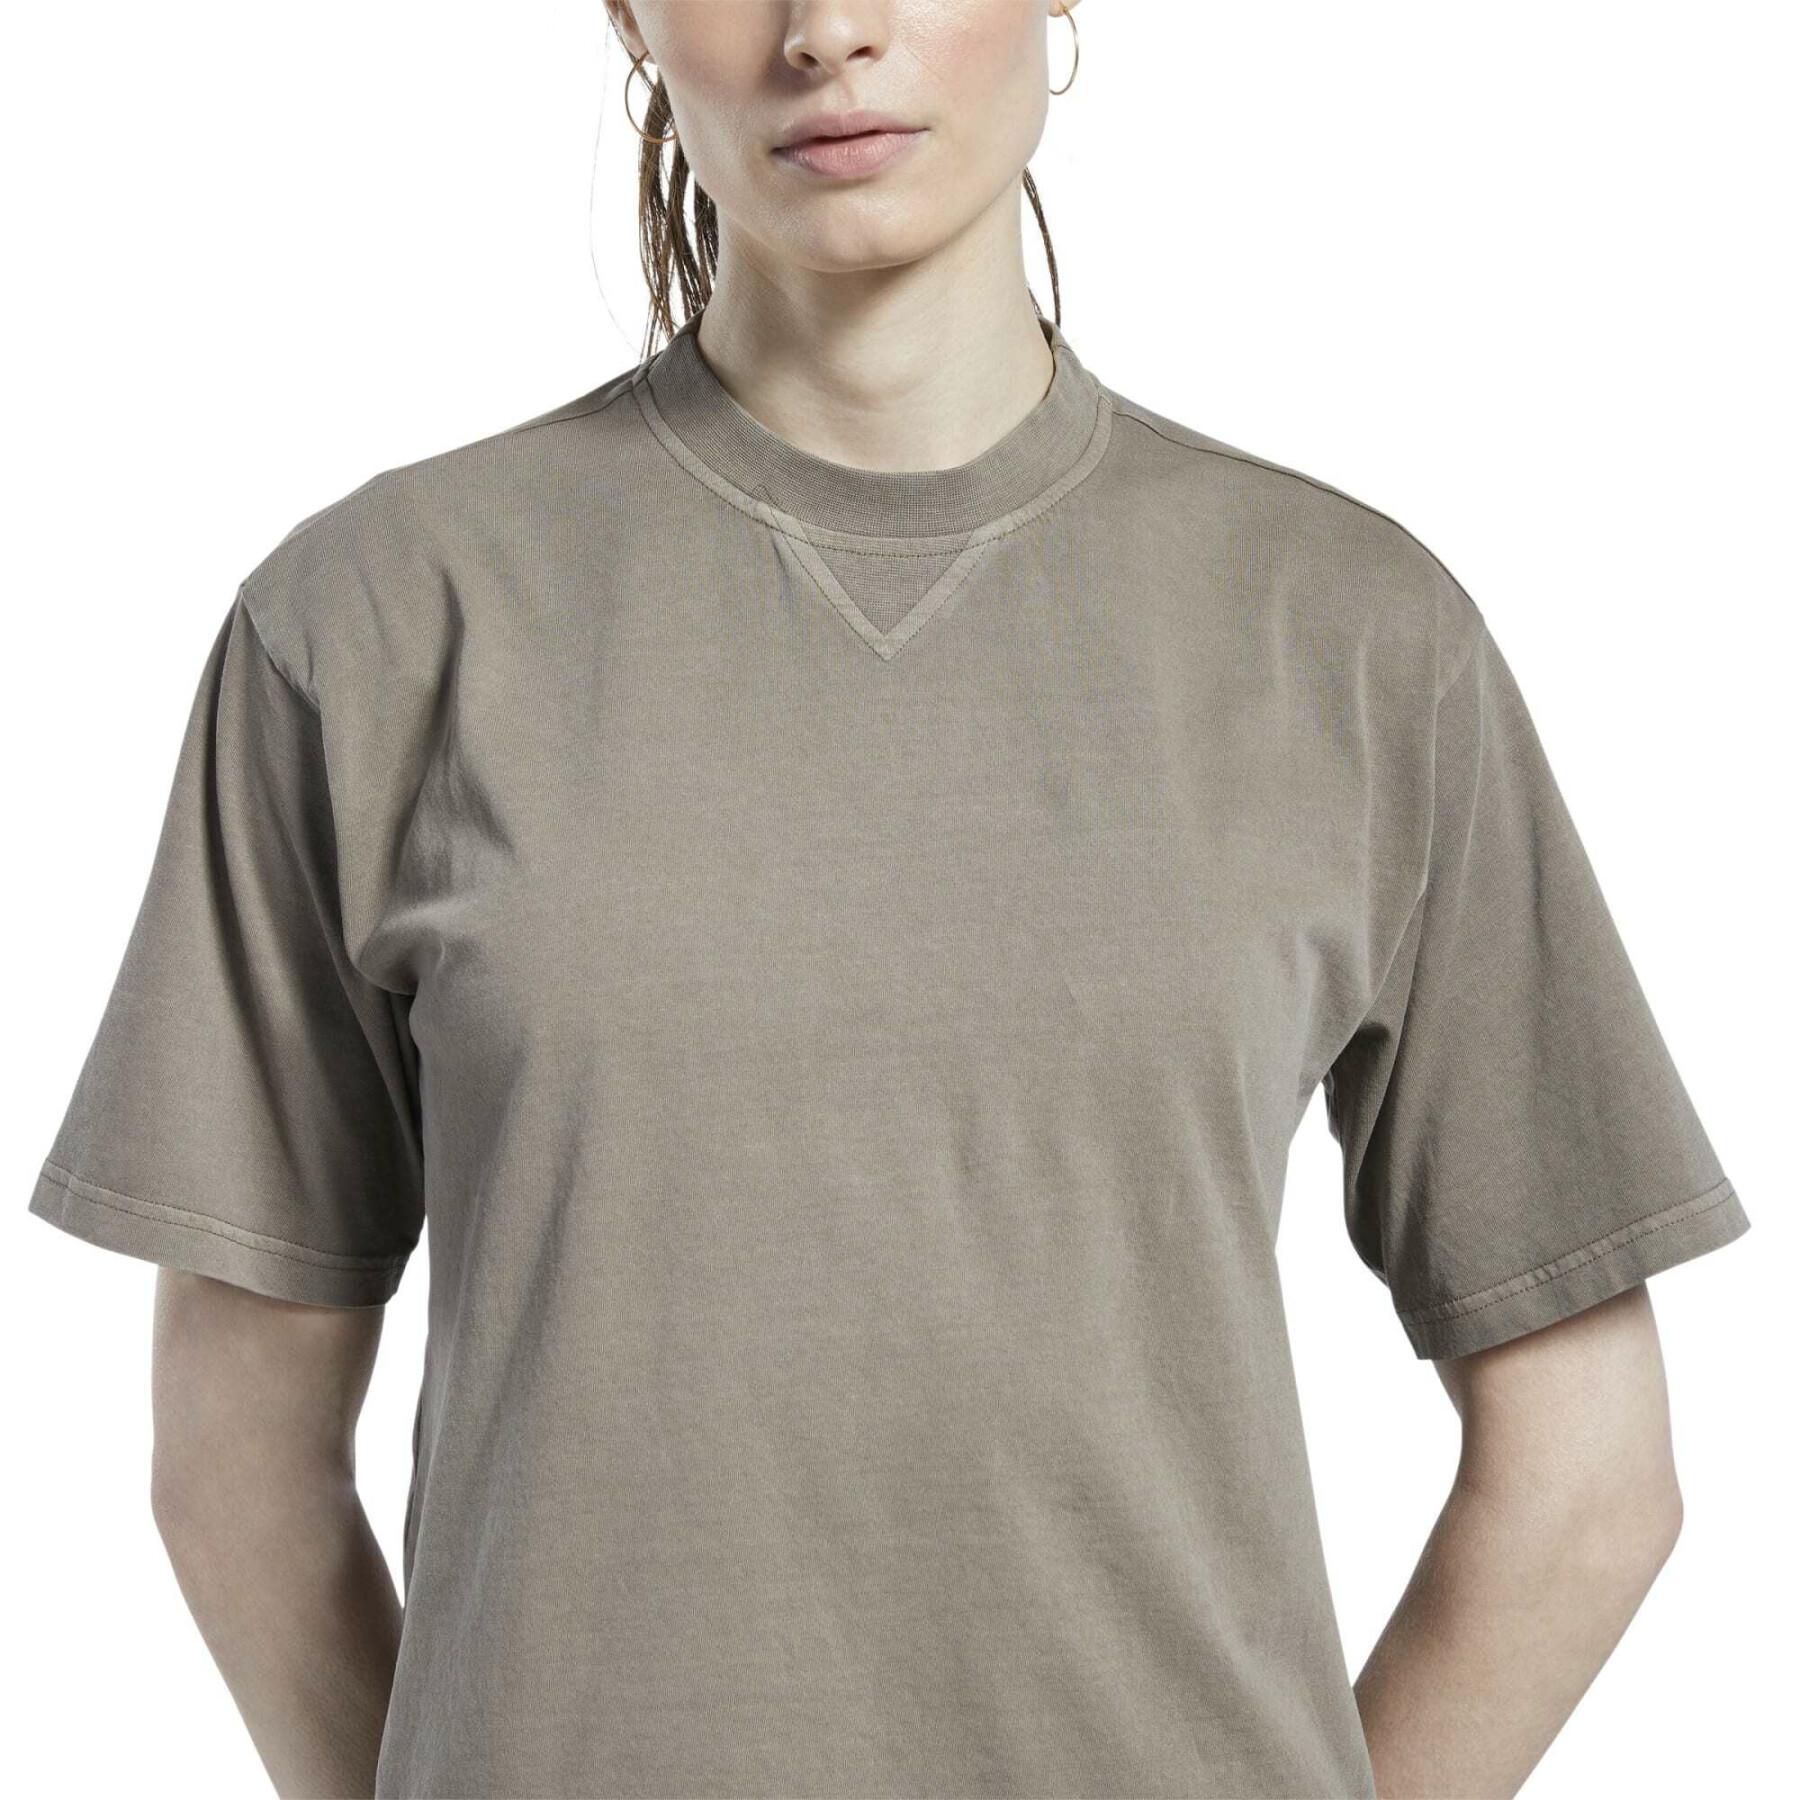 Damska koszulka z naturalnym barwnikiem o prostym kroju Reebok Classics